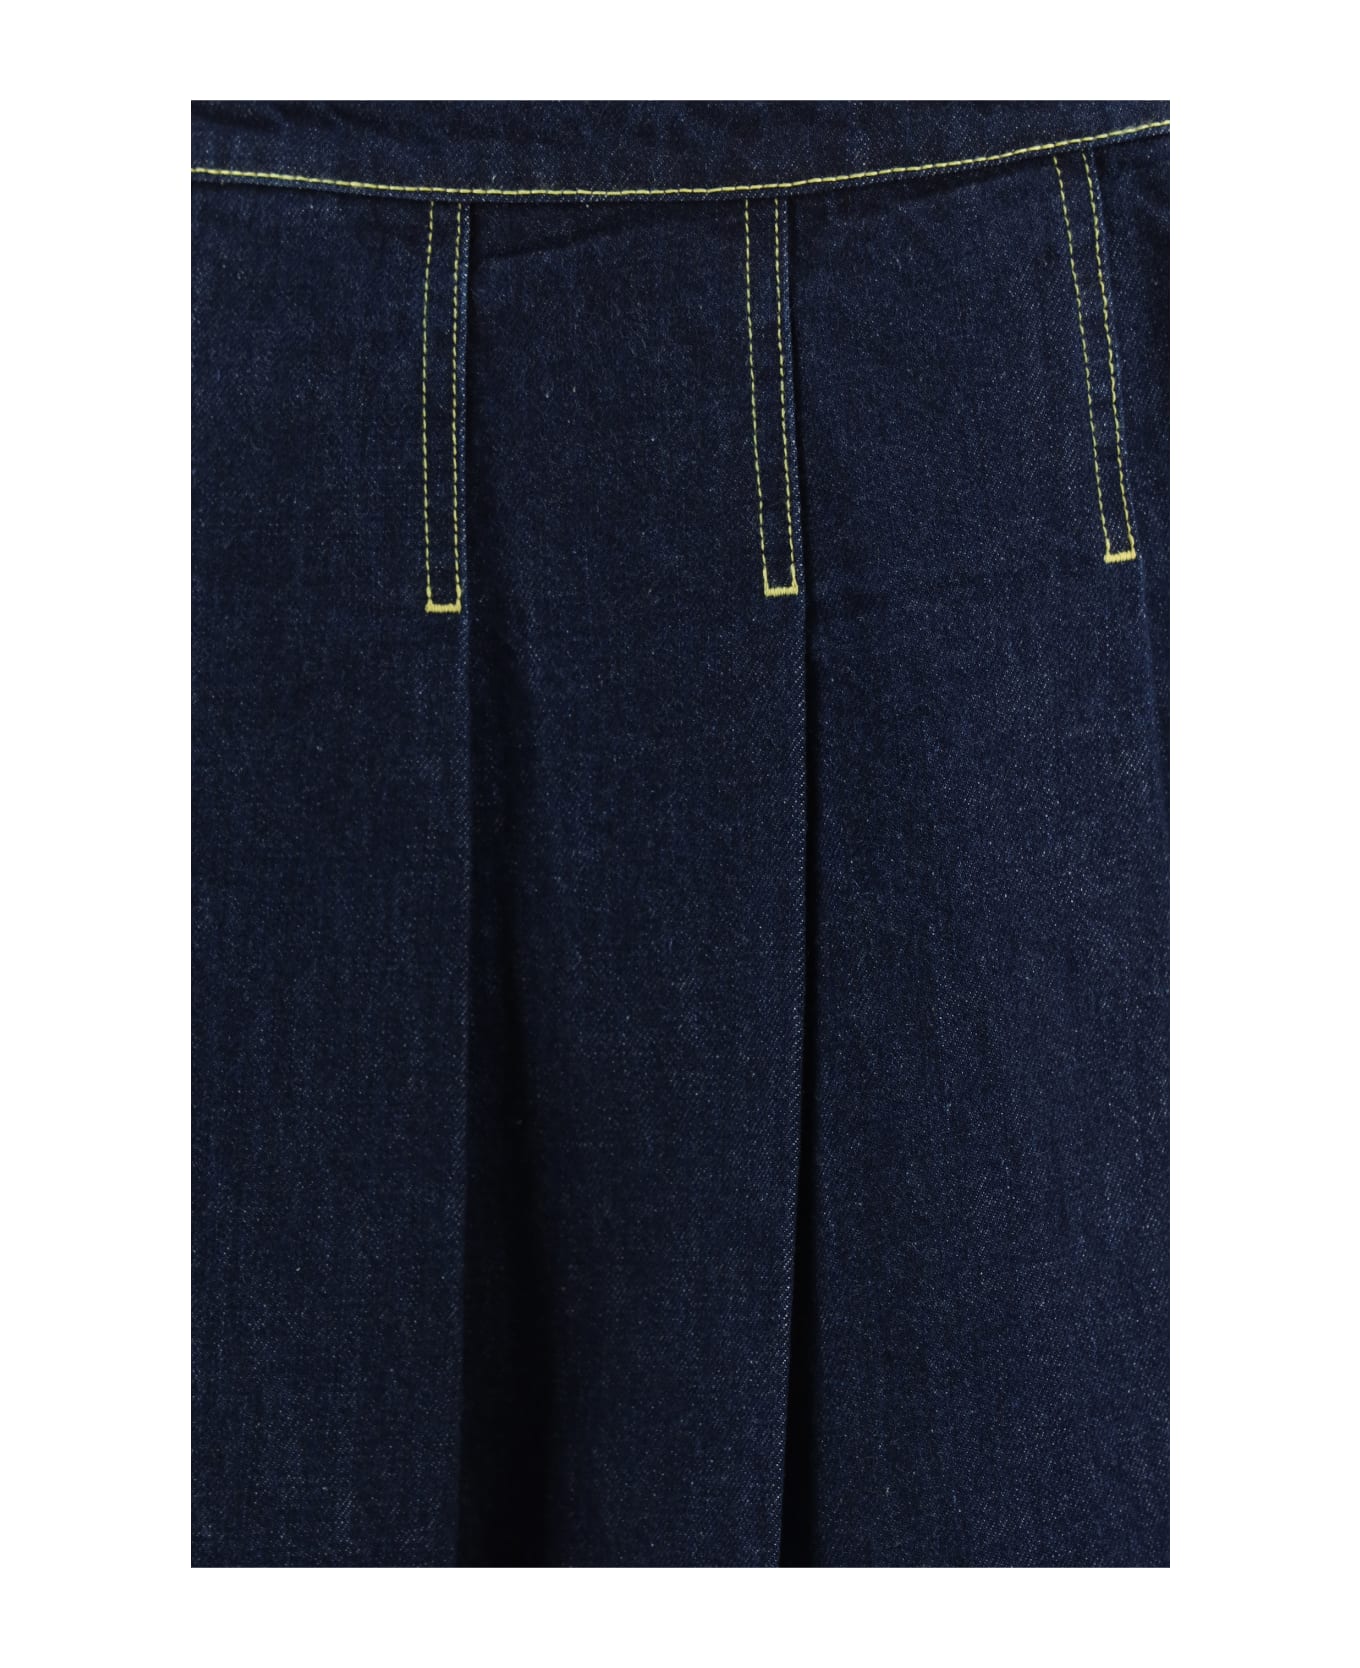 Kenzo Pleated Mini Skirt - Rinse Blue Denim スカート